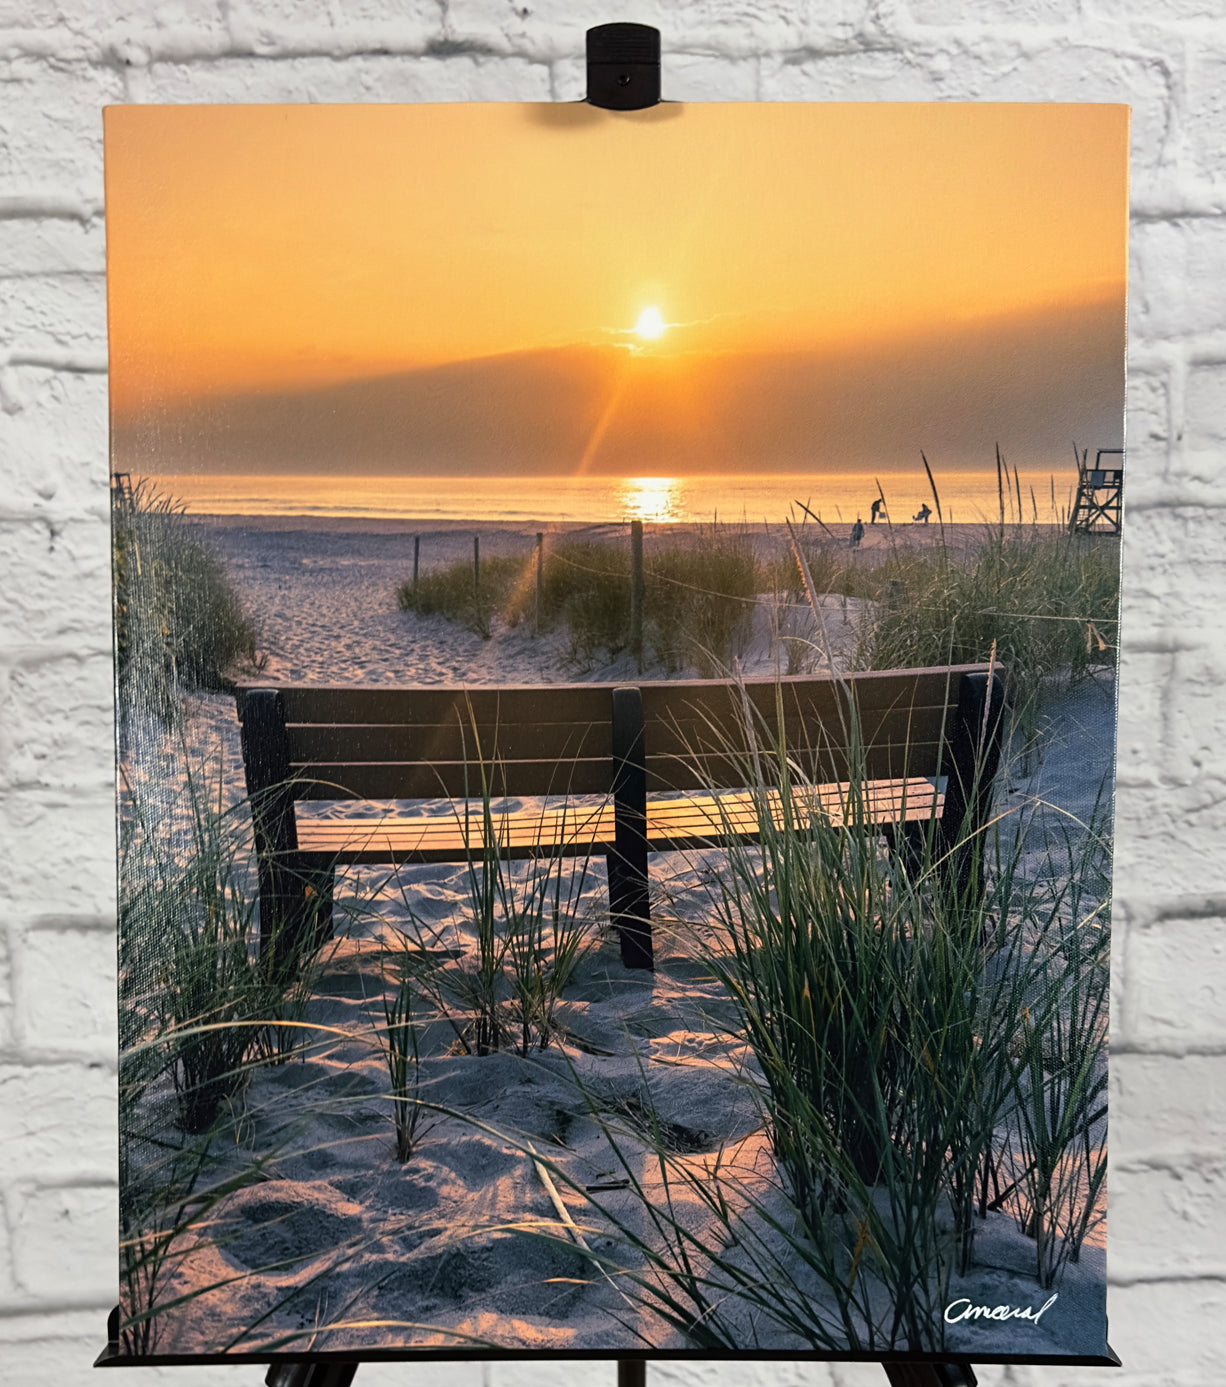 16x20 Gallery Wrap Canvas - Nauset Beach in Orleans, Cape Cod